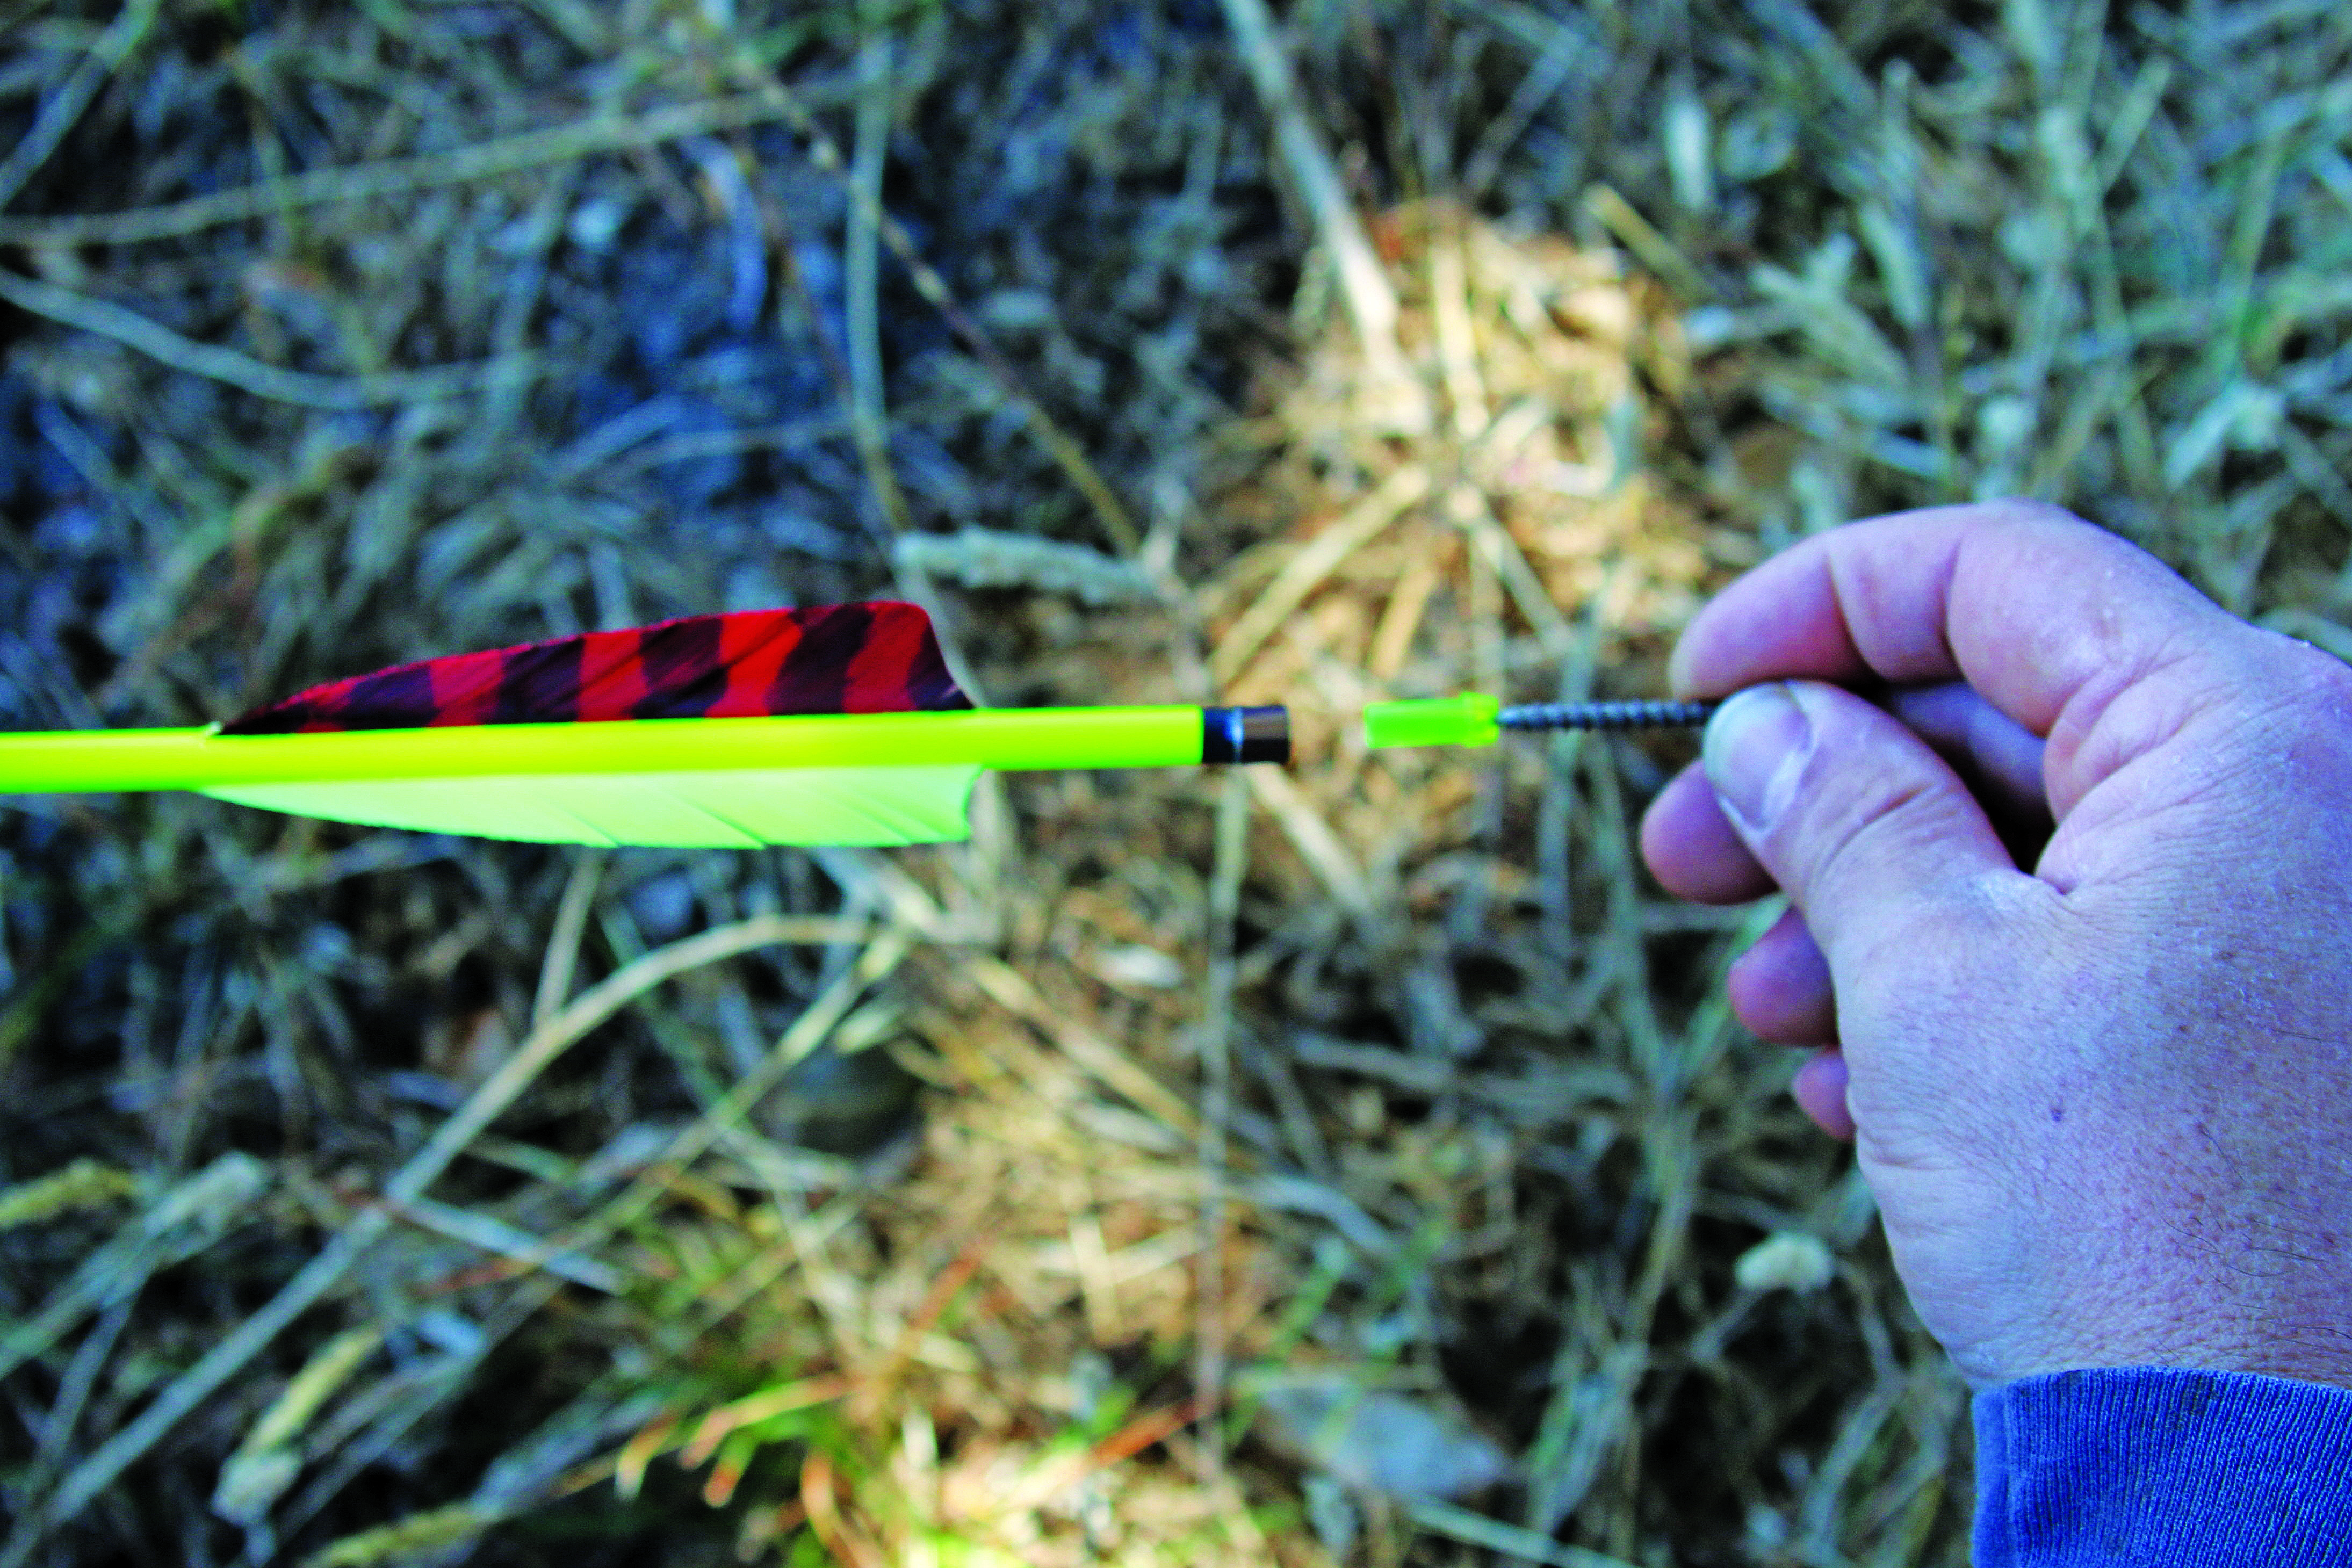 repairing an arrow in the field